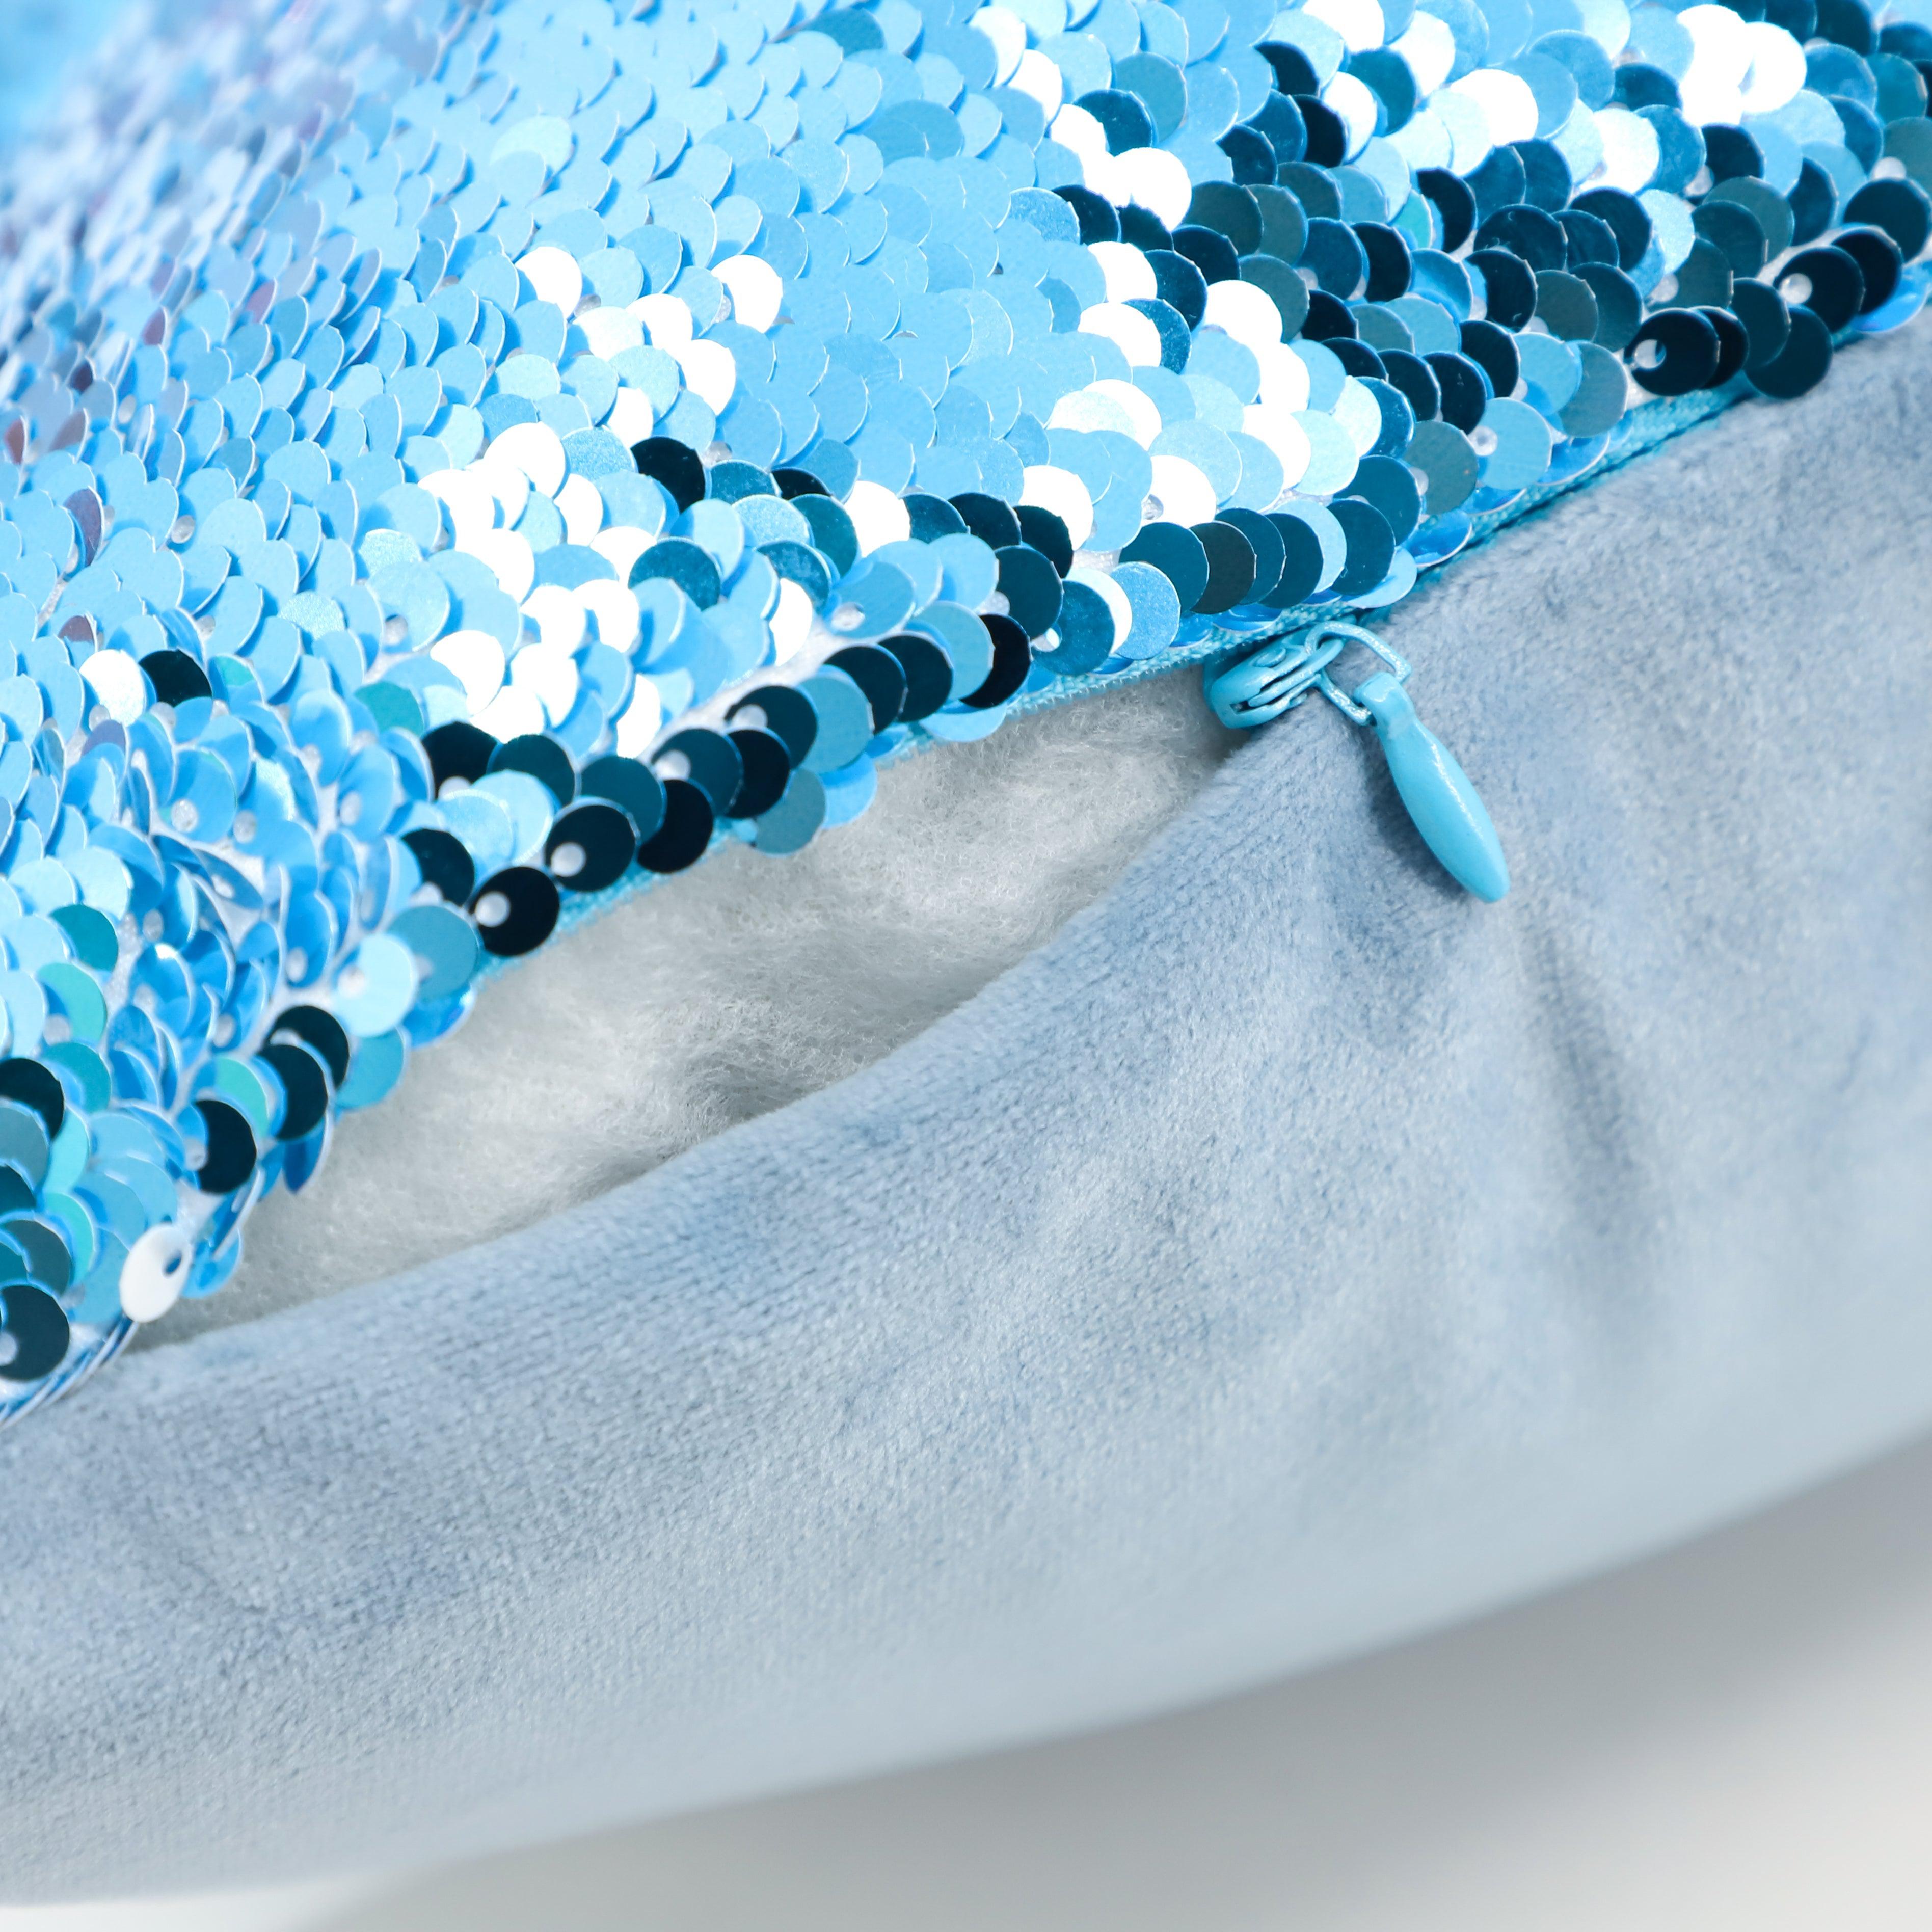 Sequin Mermaid Cushion Covers - Blue/White-Design Blanks